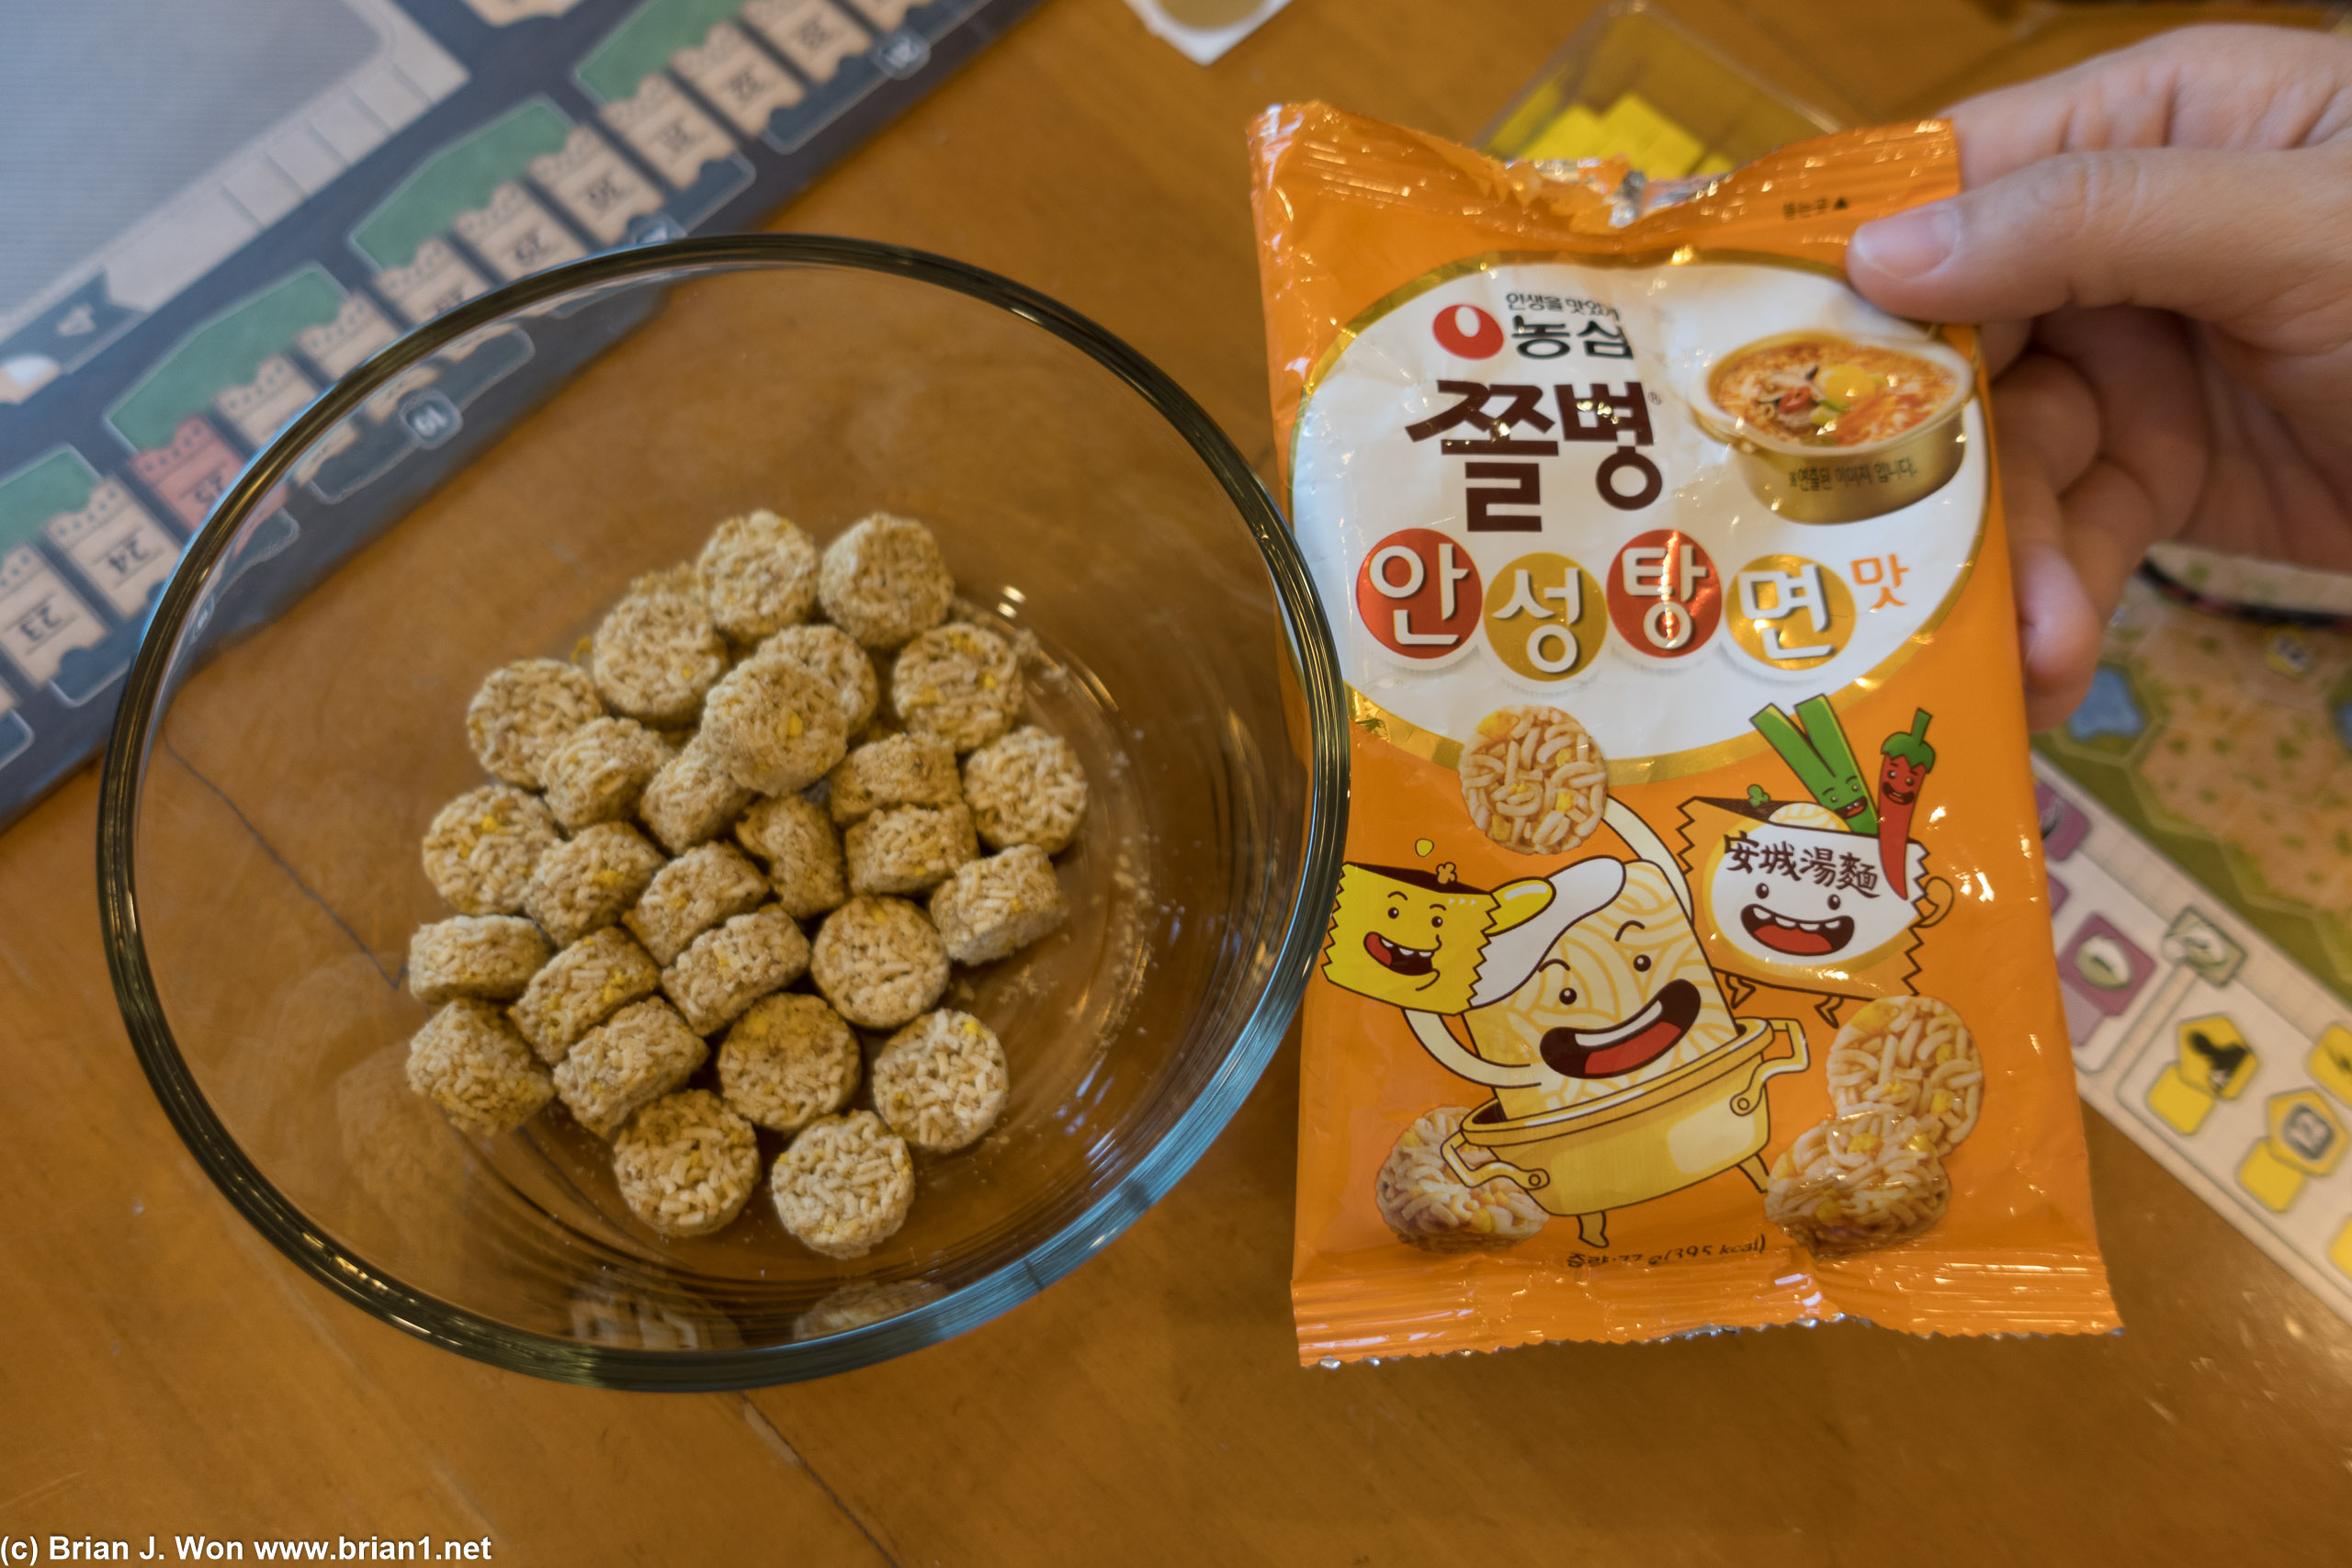 Slightly salty, slightly sweet snacks from South Korea.